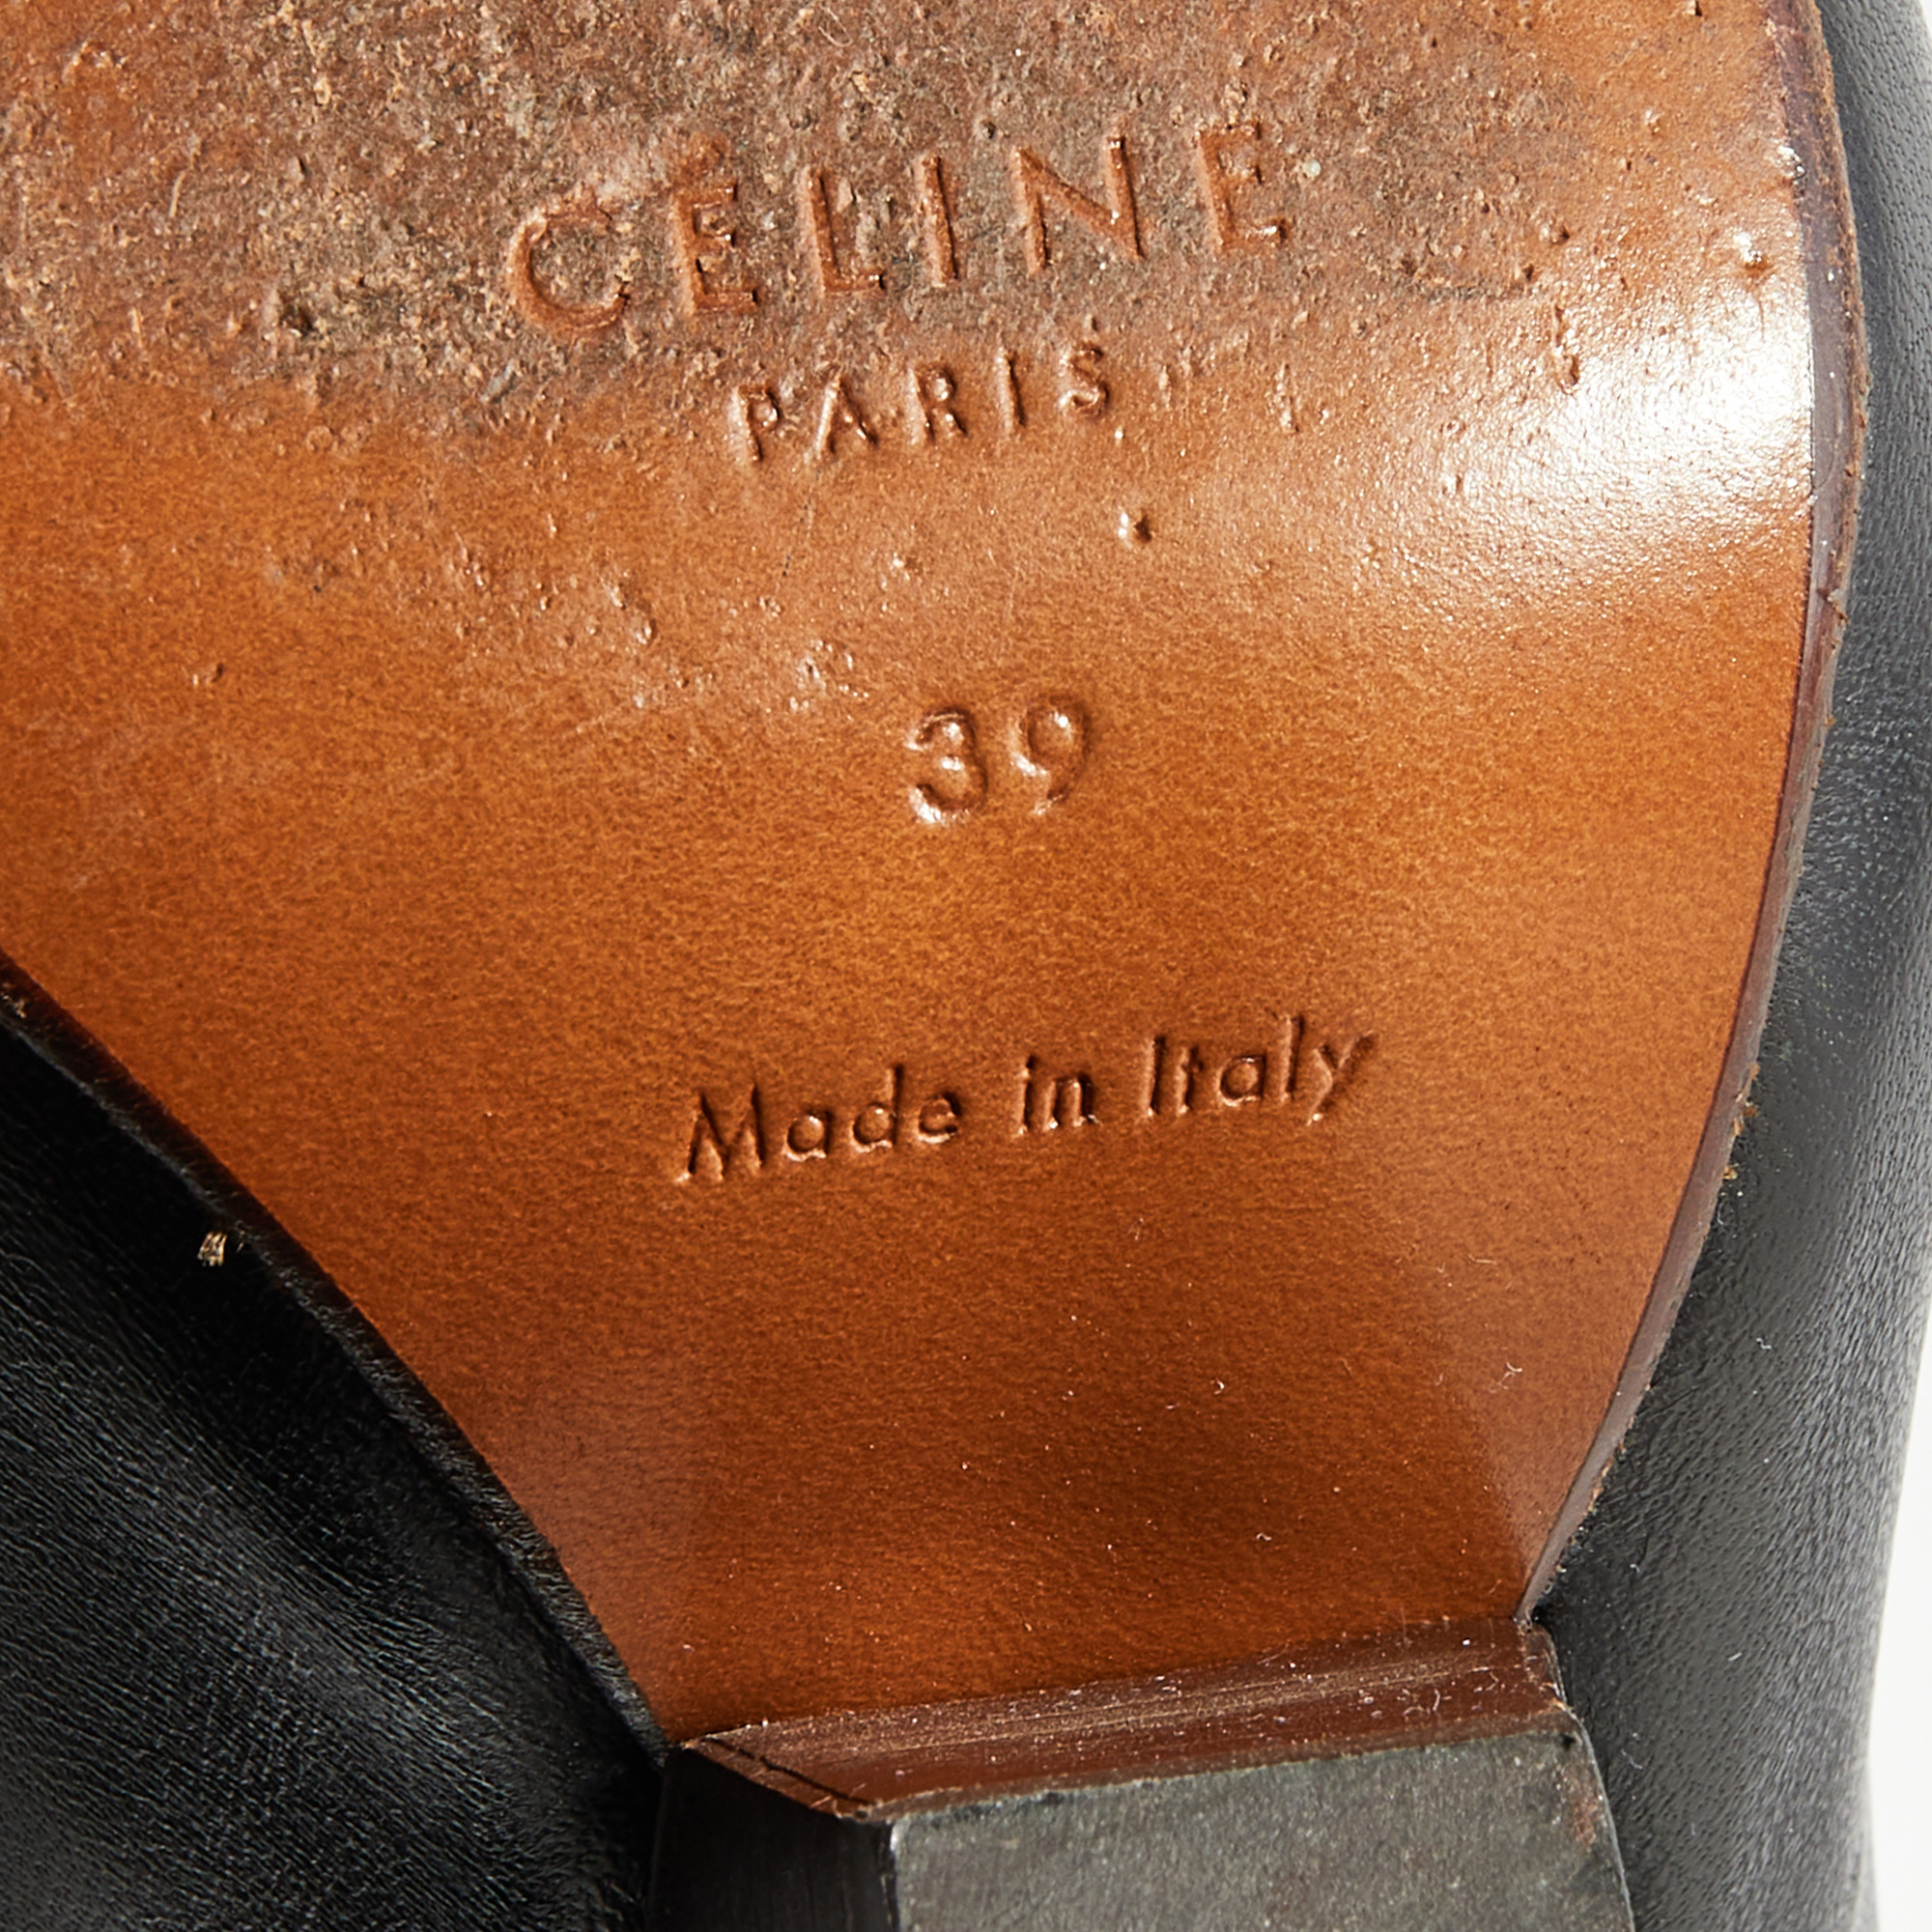 Celine Black Leather Square Toe Wedge Pumps Size 39